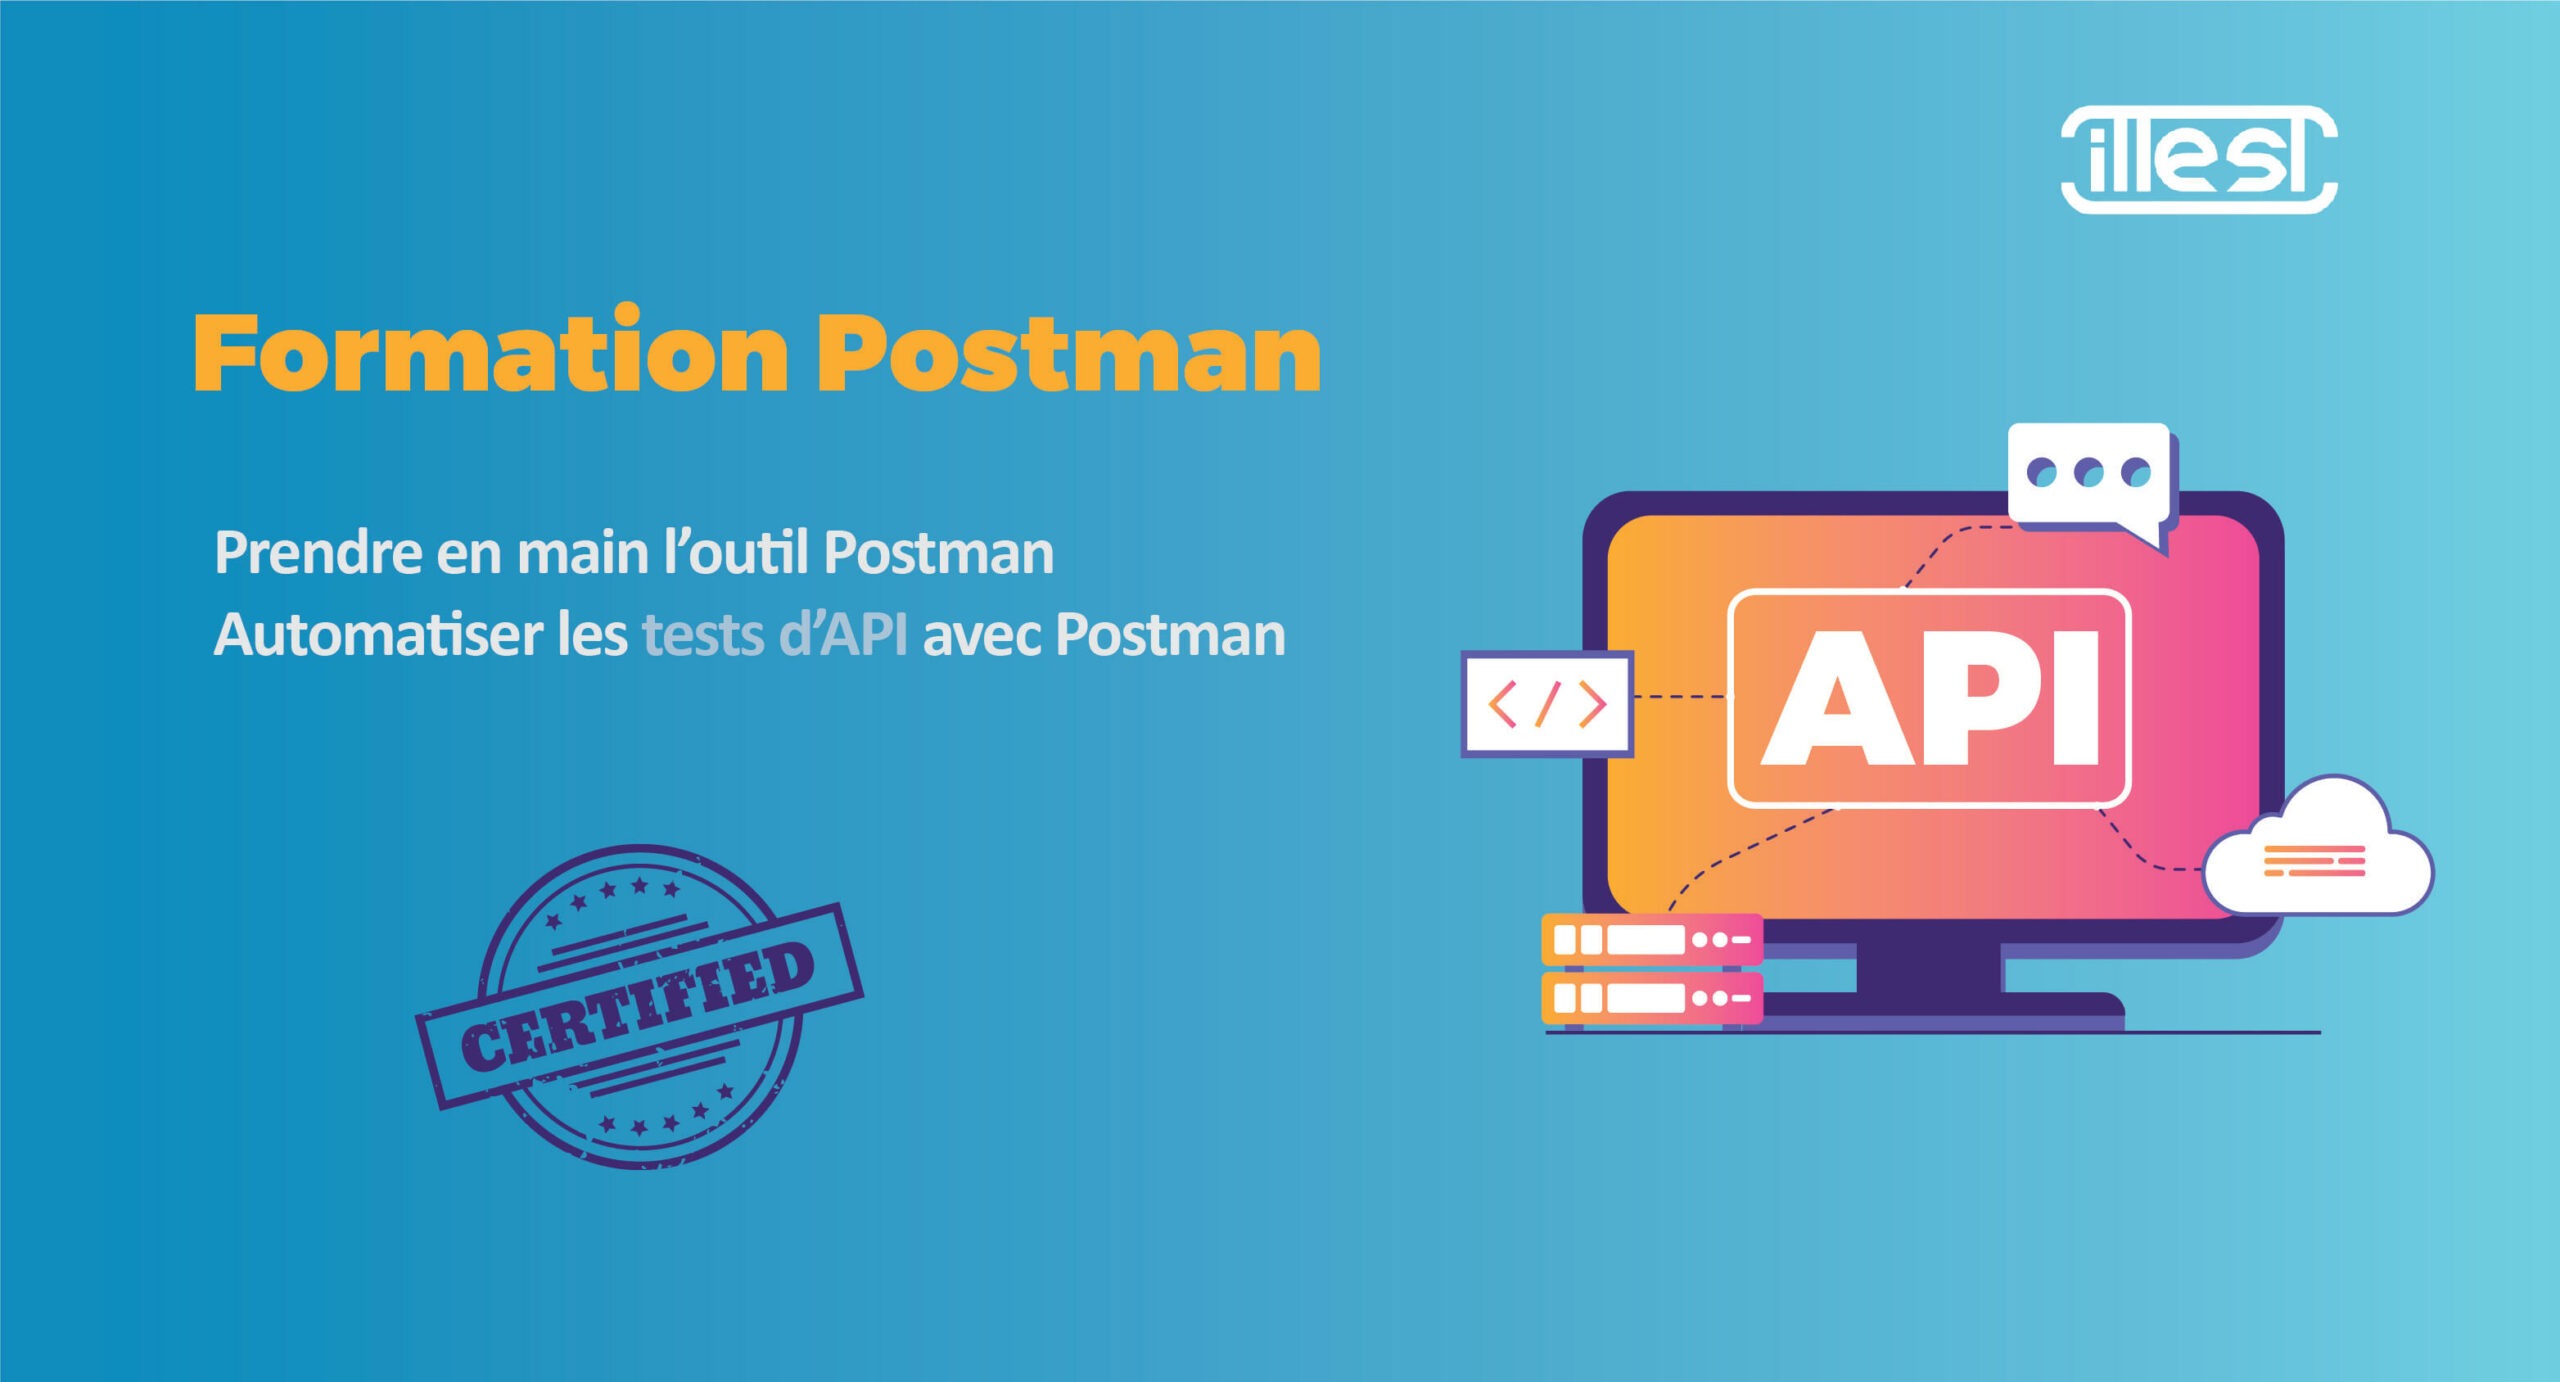 Formation Postman : automatiser les tests d’API